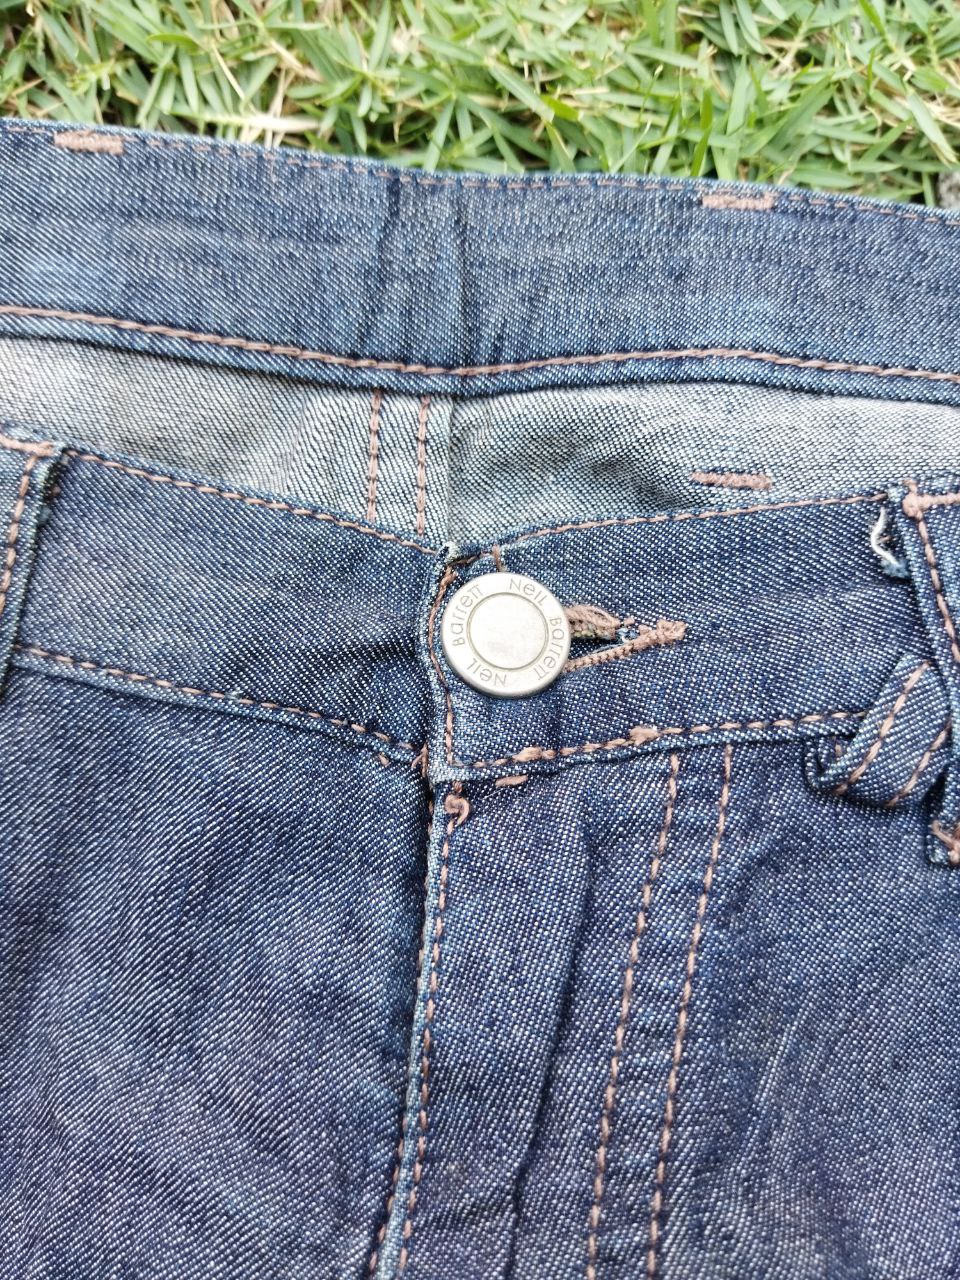 Vintage Neil Barrett Zipper Jeans - 4